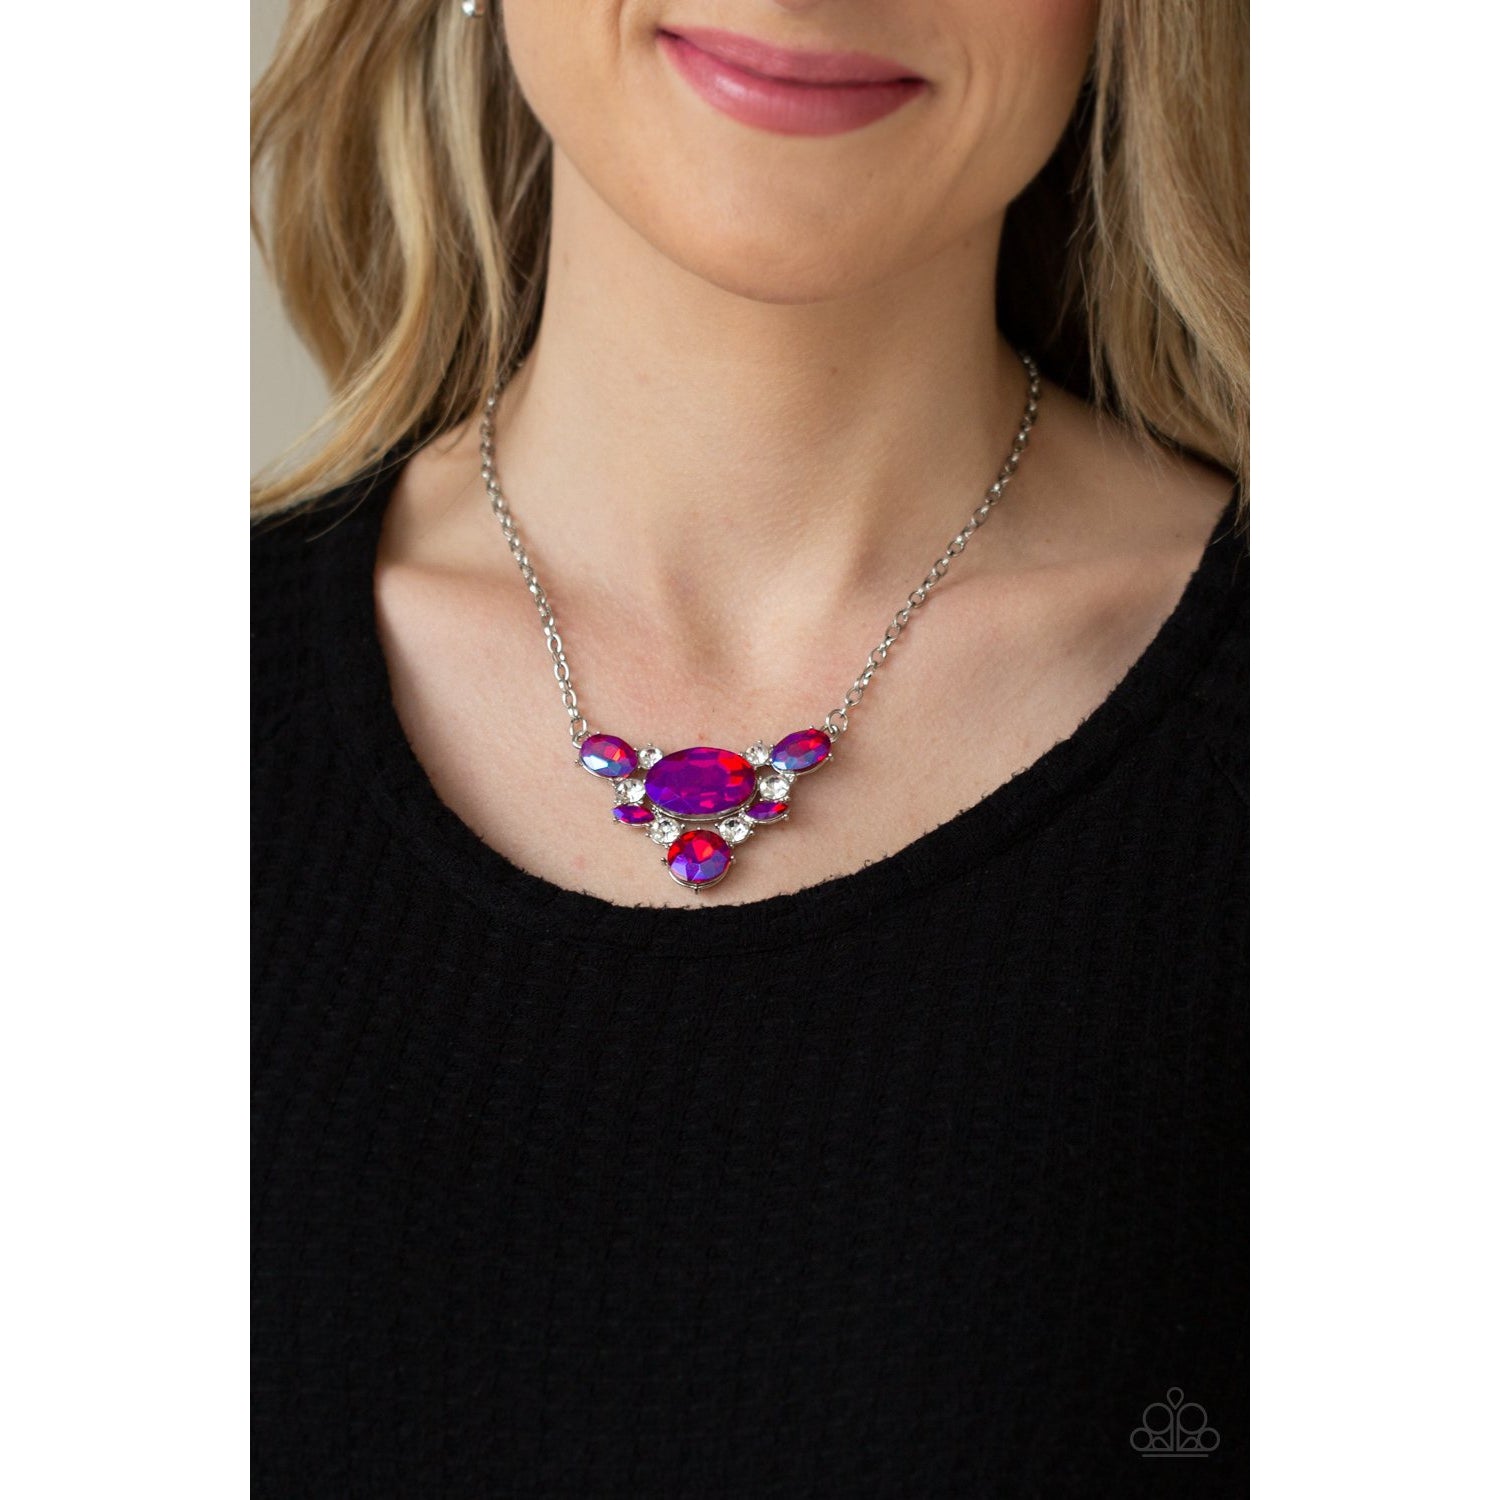 Cosmic Coronation - Pink Iridescent Oil Spill Necklace - Paparazzi Accessories - GlaMarous Titi Jewels